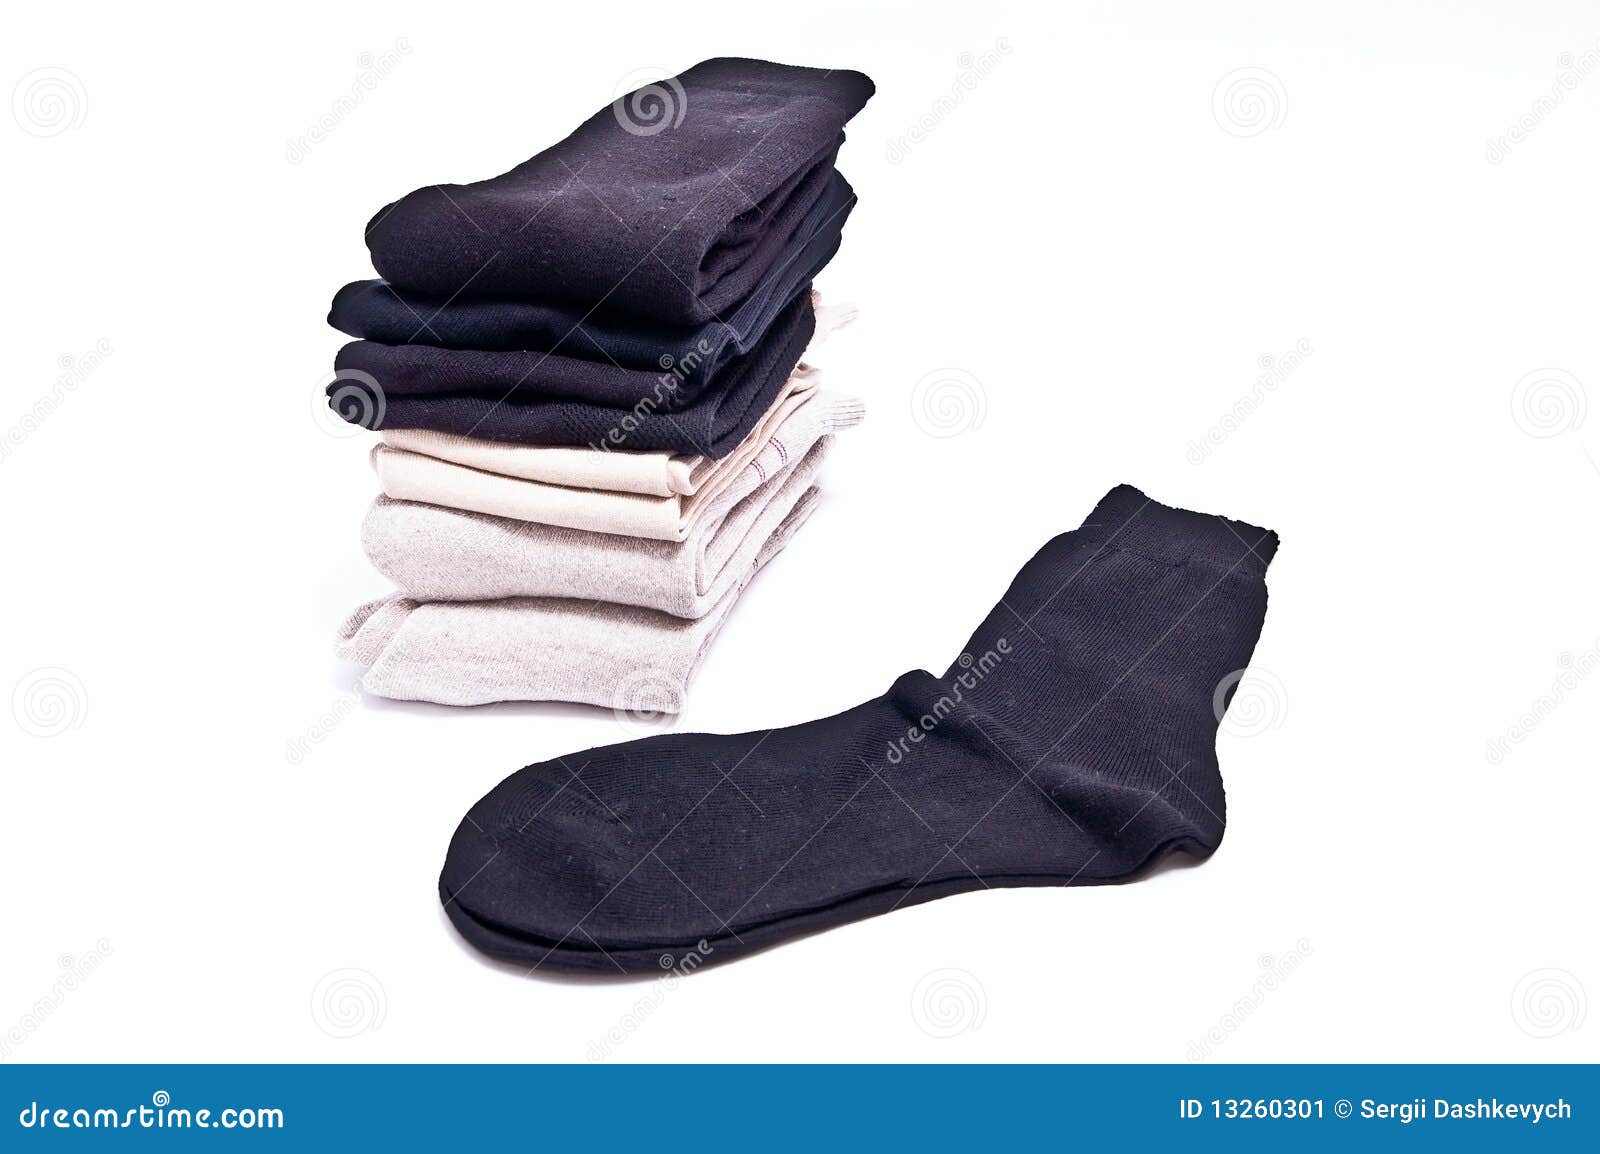 Socks stock image. Image of path, outline, horizontal - 13260301